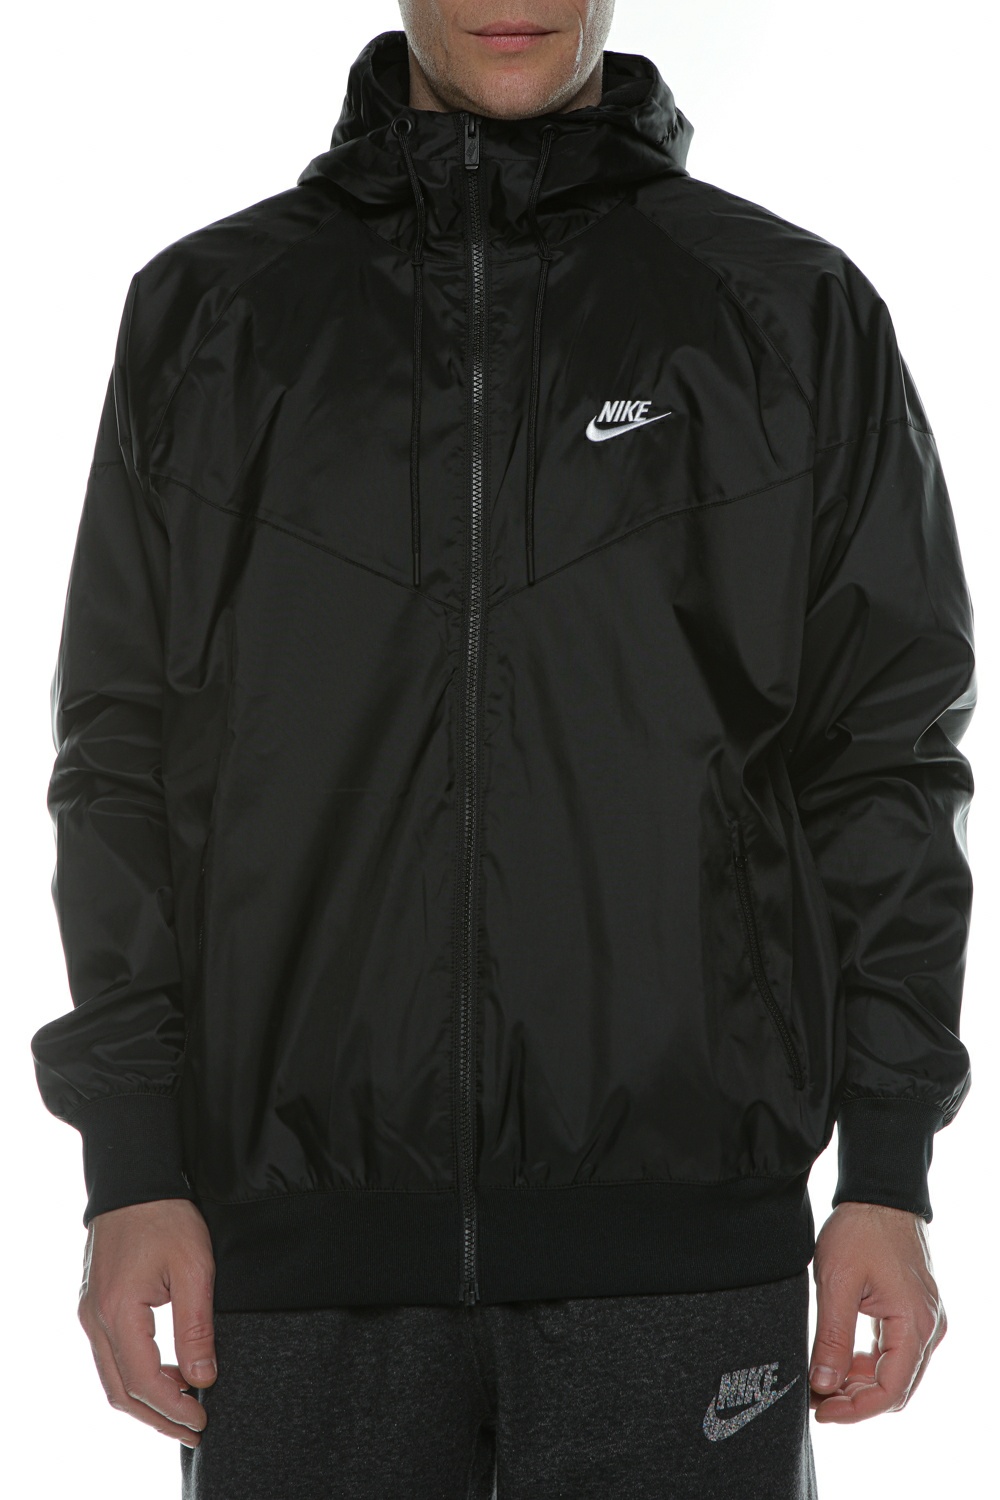 NIKE – Ανδρικο αντιανεμικο jacket NIKE NSW SPE WVN LND WR HD JKT μαυρο